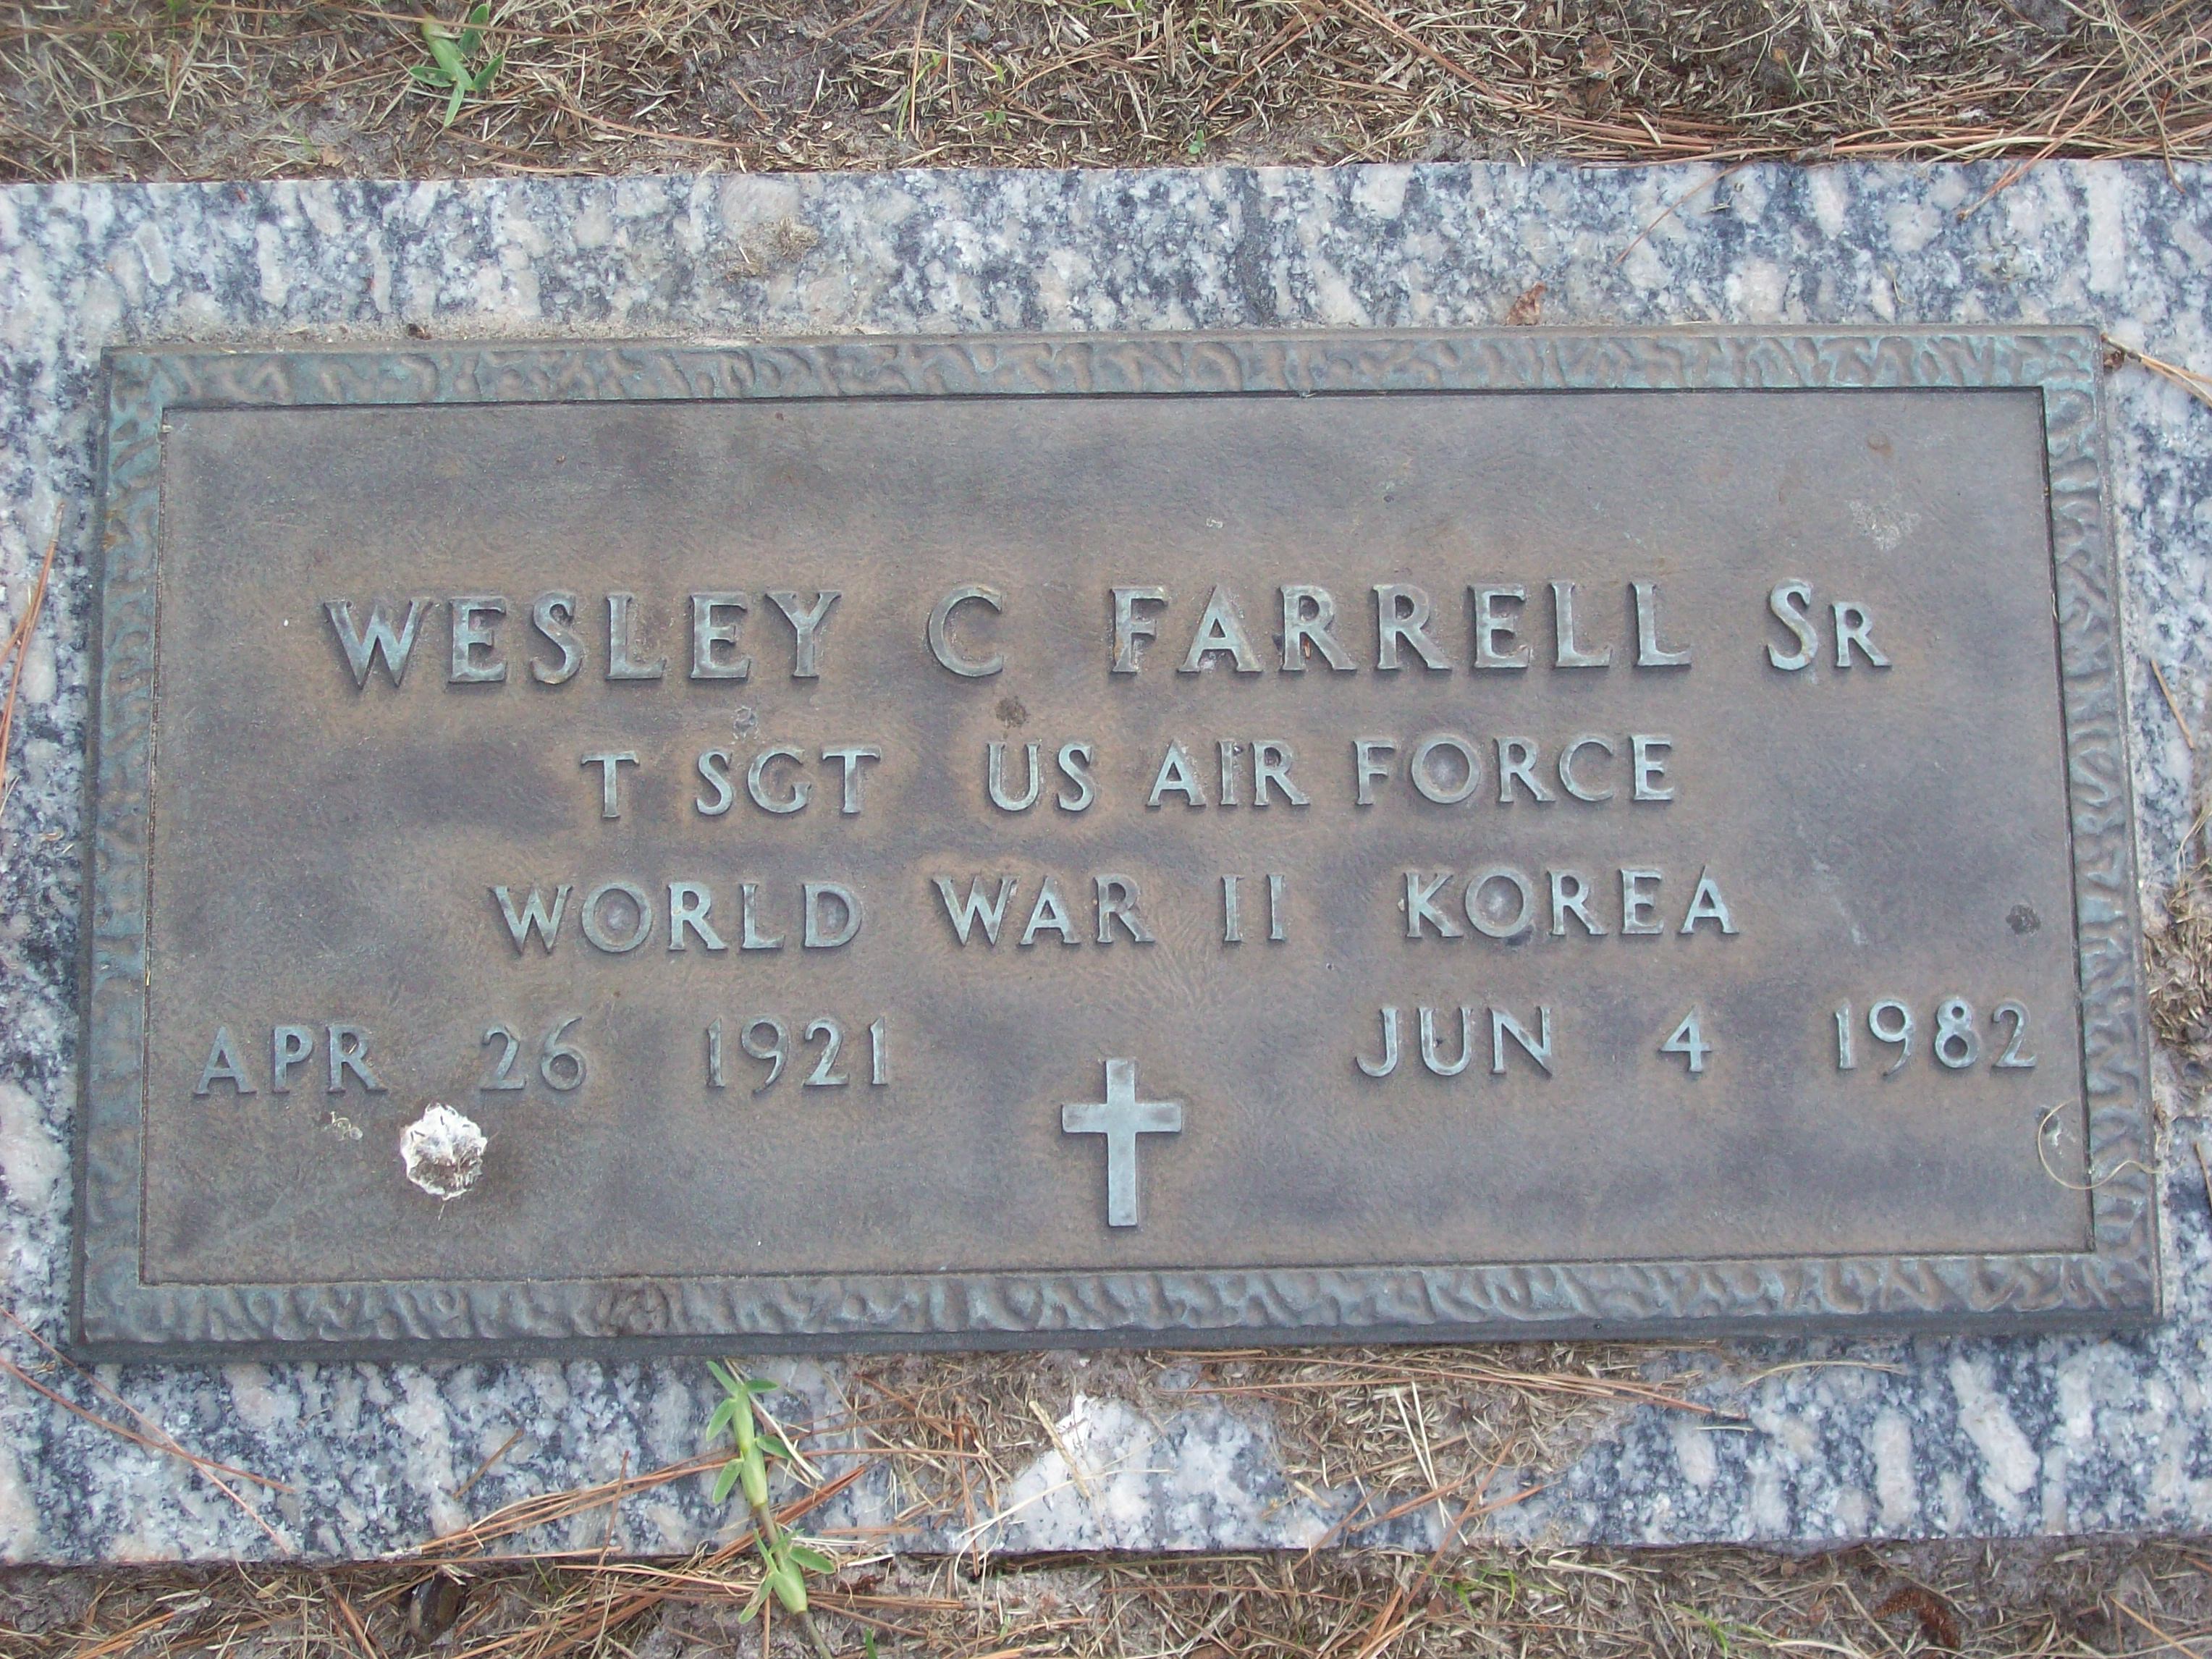 PMG_FARRELL_SR_WESLEY_C_4-26-1921-6-4-1982_MIL.JPG